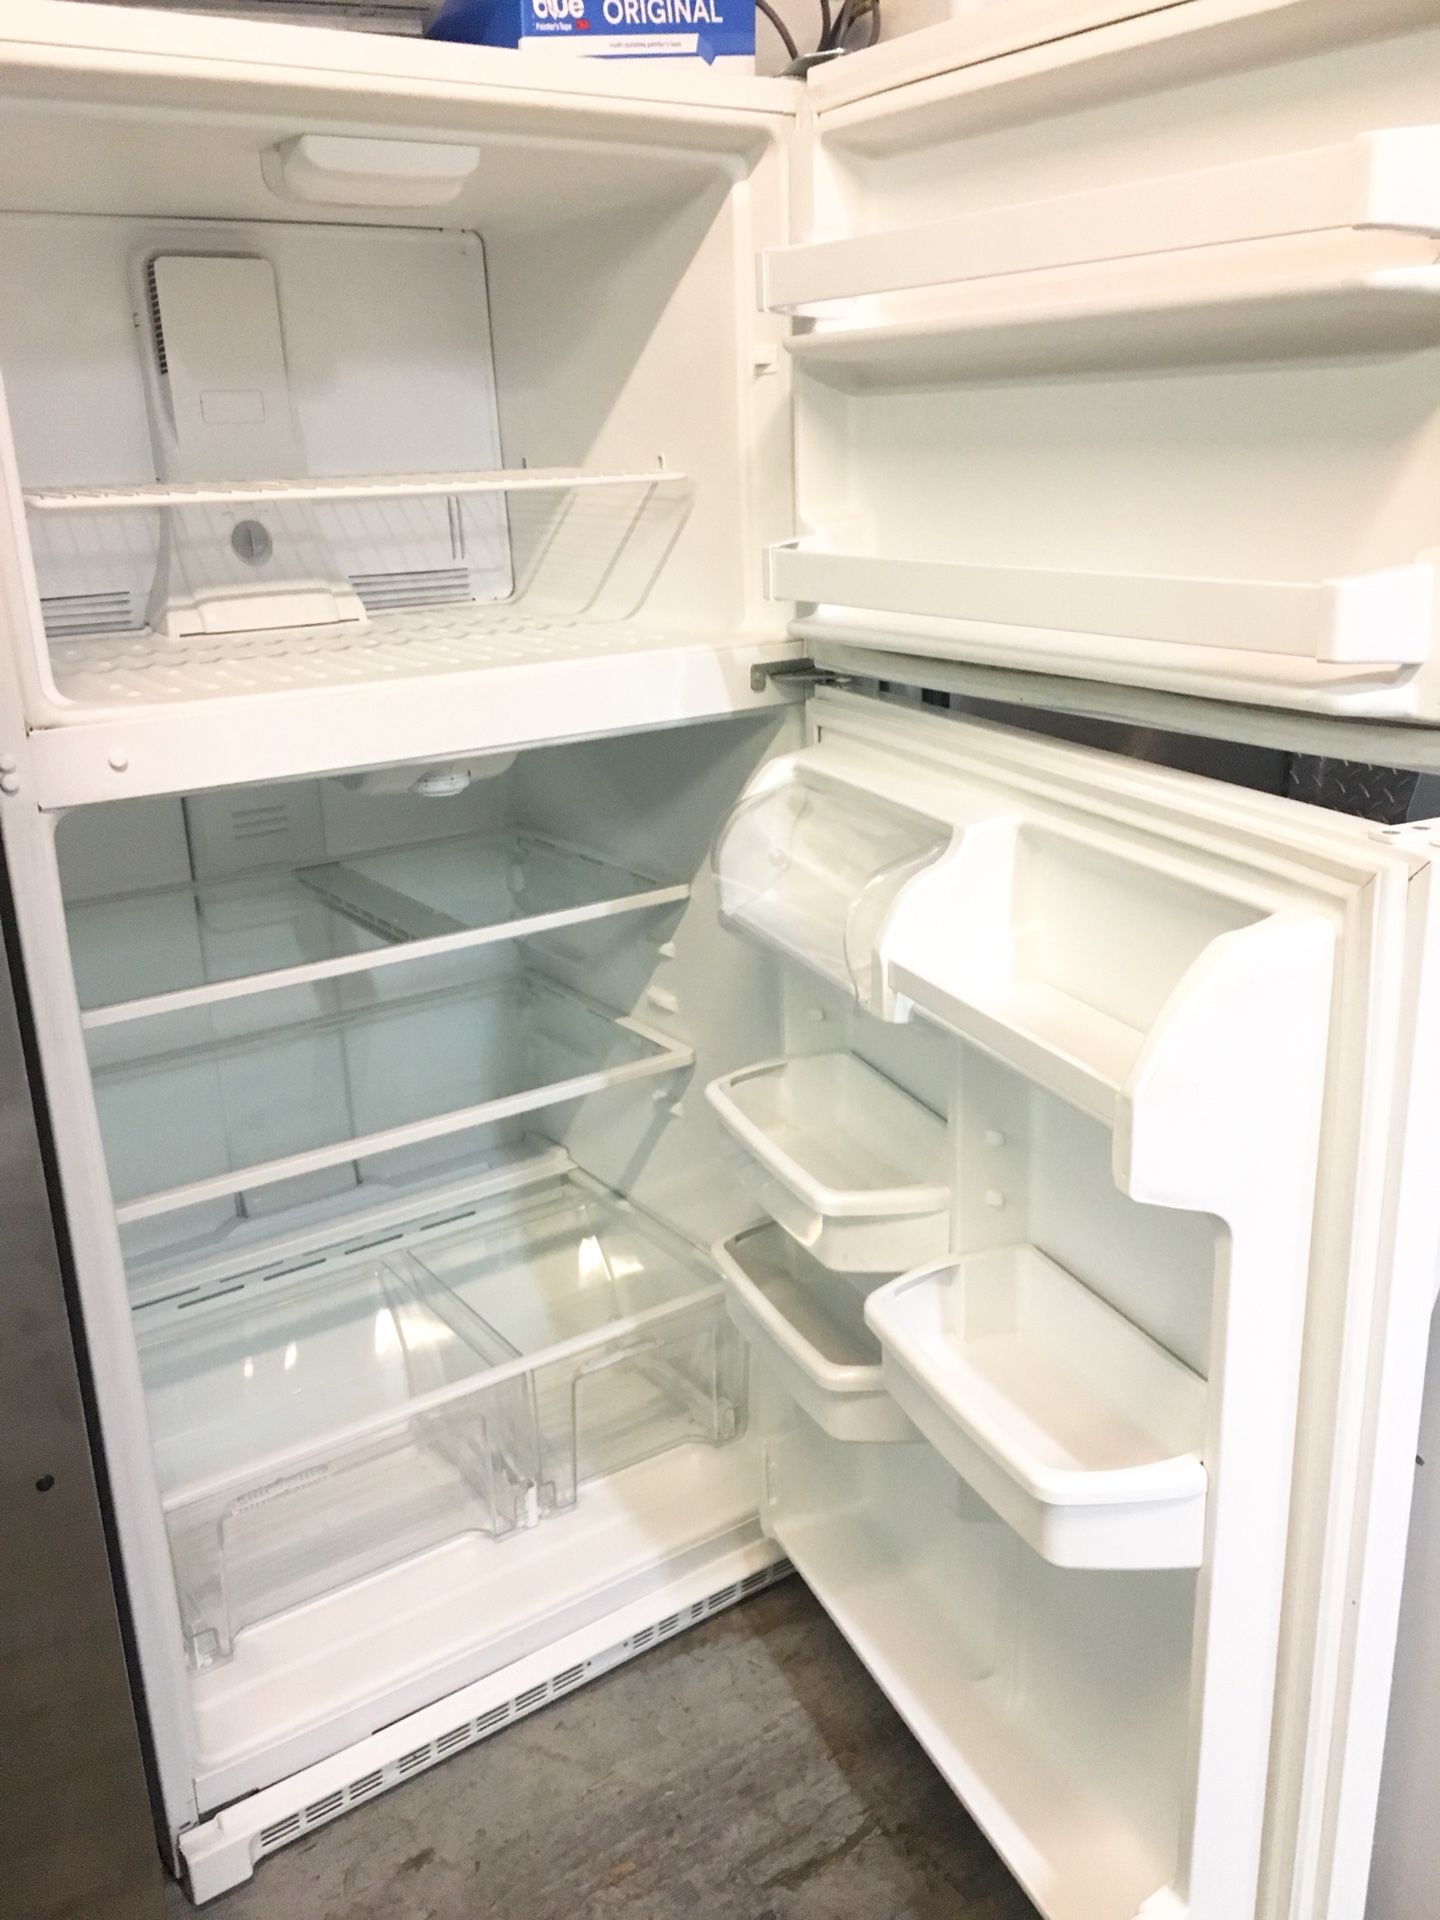 Top freezer white 21cuft kenmore refrigerator 33inch wide X 66”h